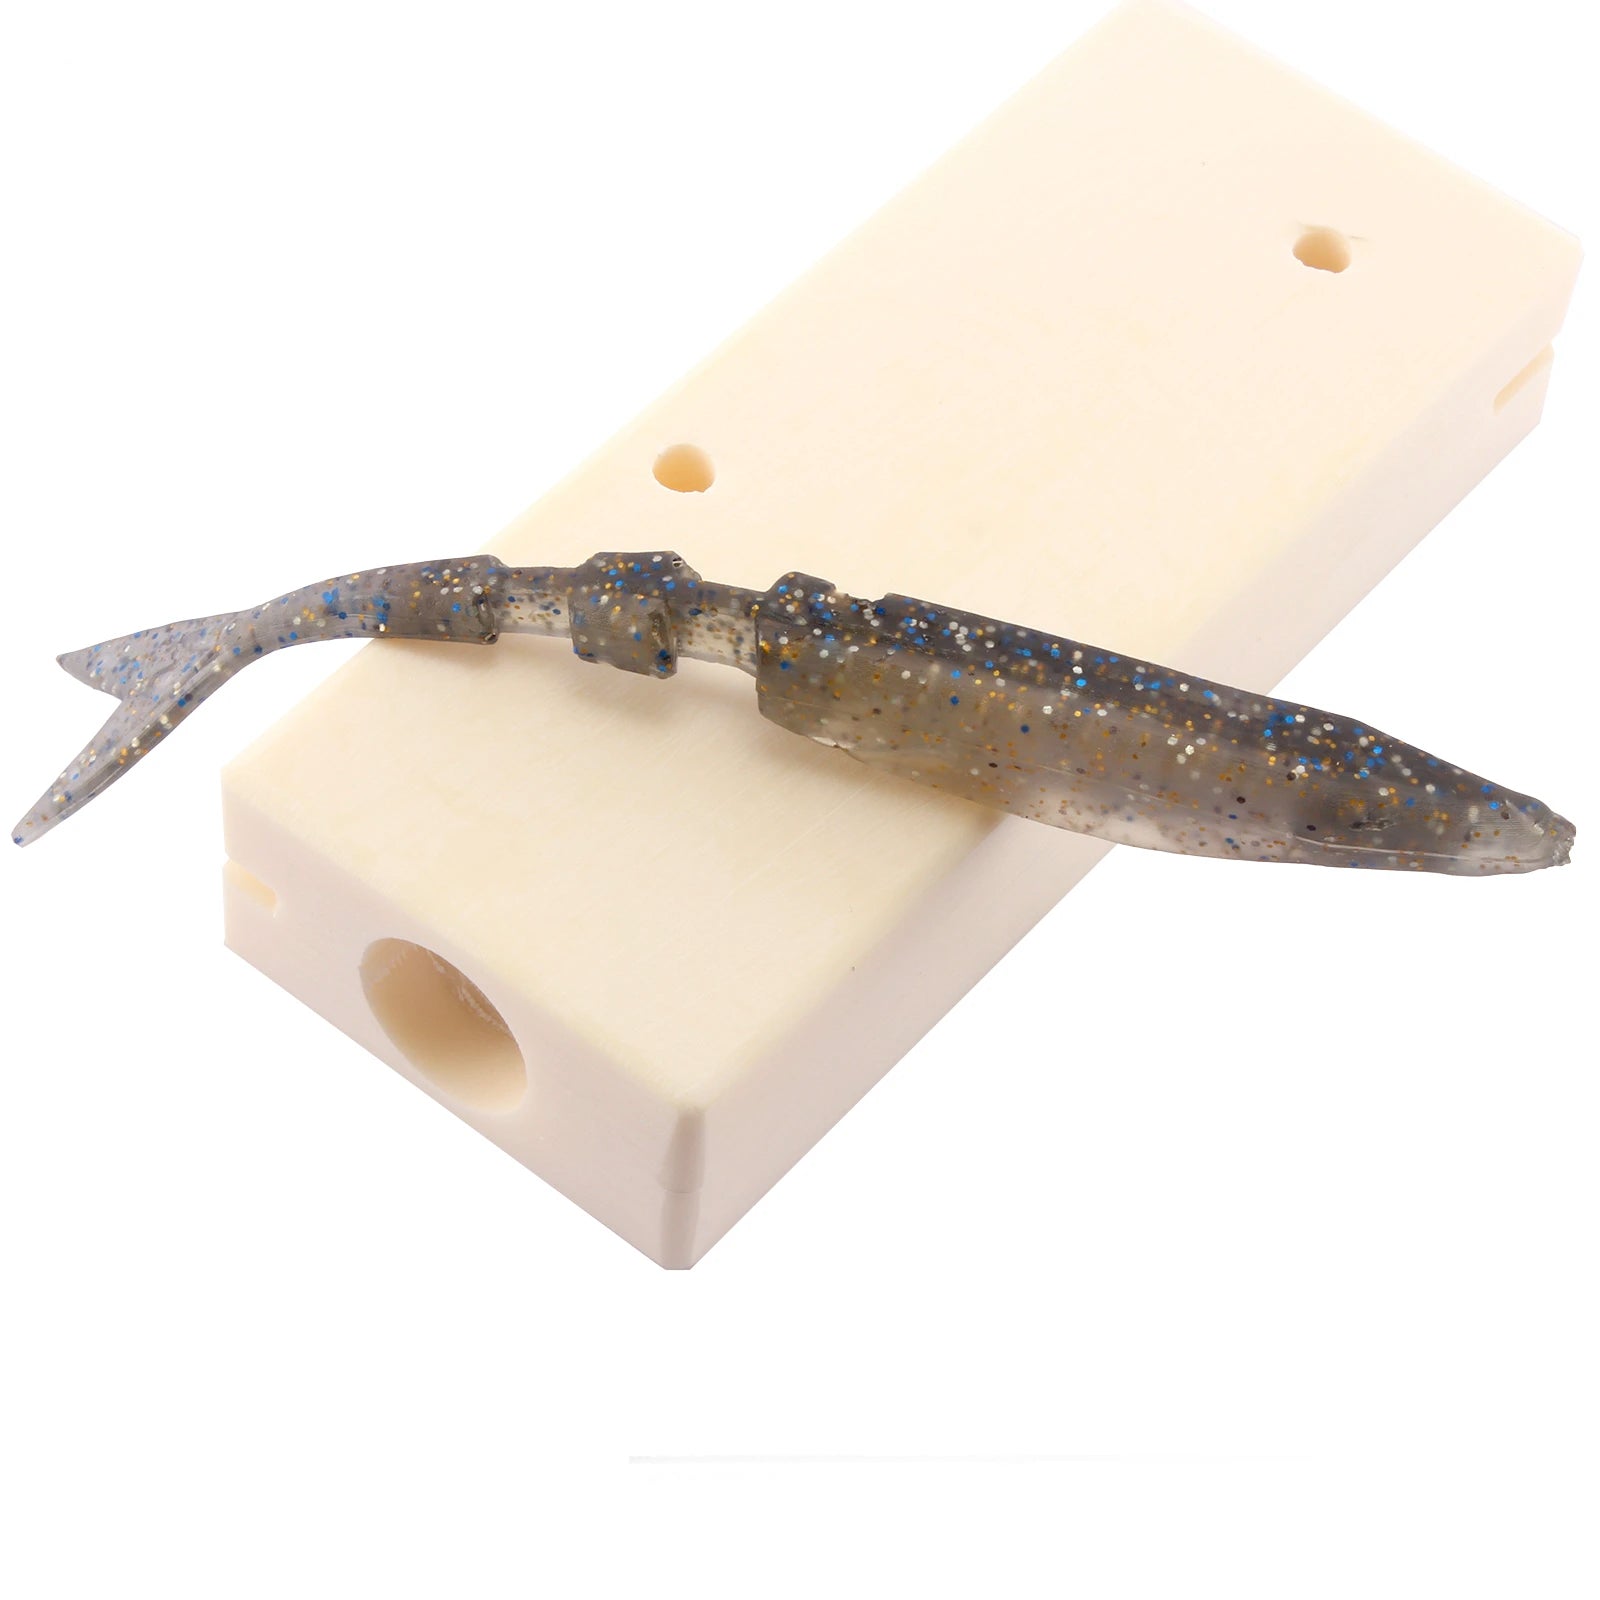 Fishing soft bait mold RingFry 5 inch model ID W317 - Artificial